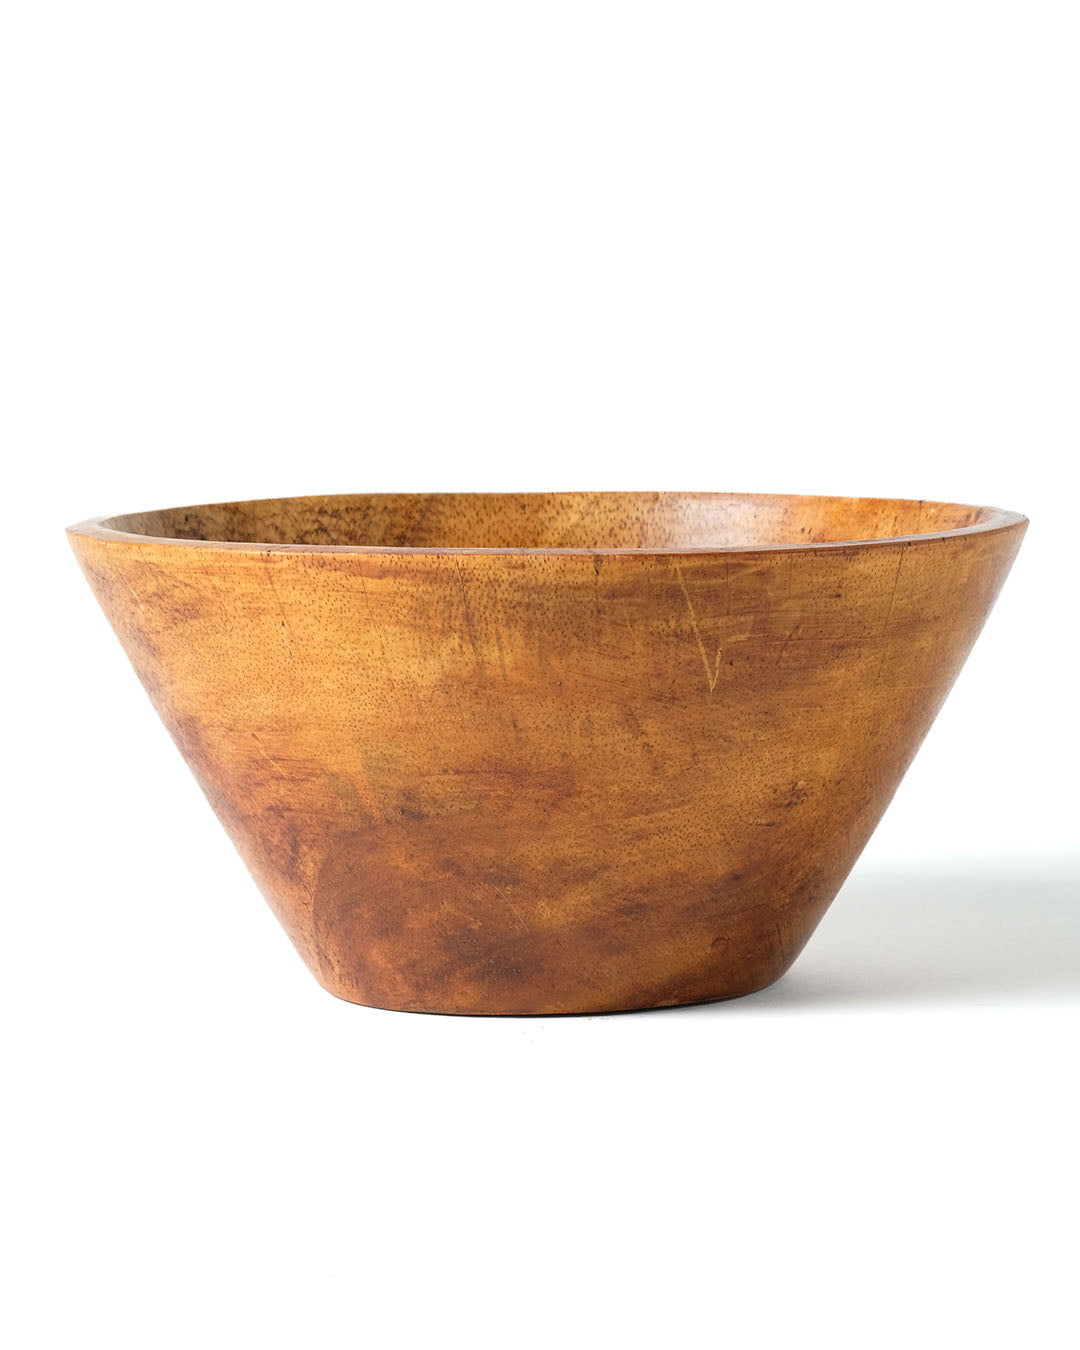 Bowl de madera maciza de teca natural Bandowoso, forma cónica, acabado natural,  hecho a mano, 2 medidas, hecho en Indonesia